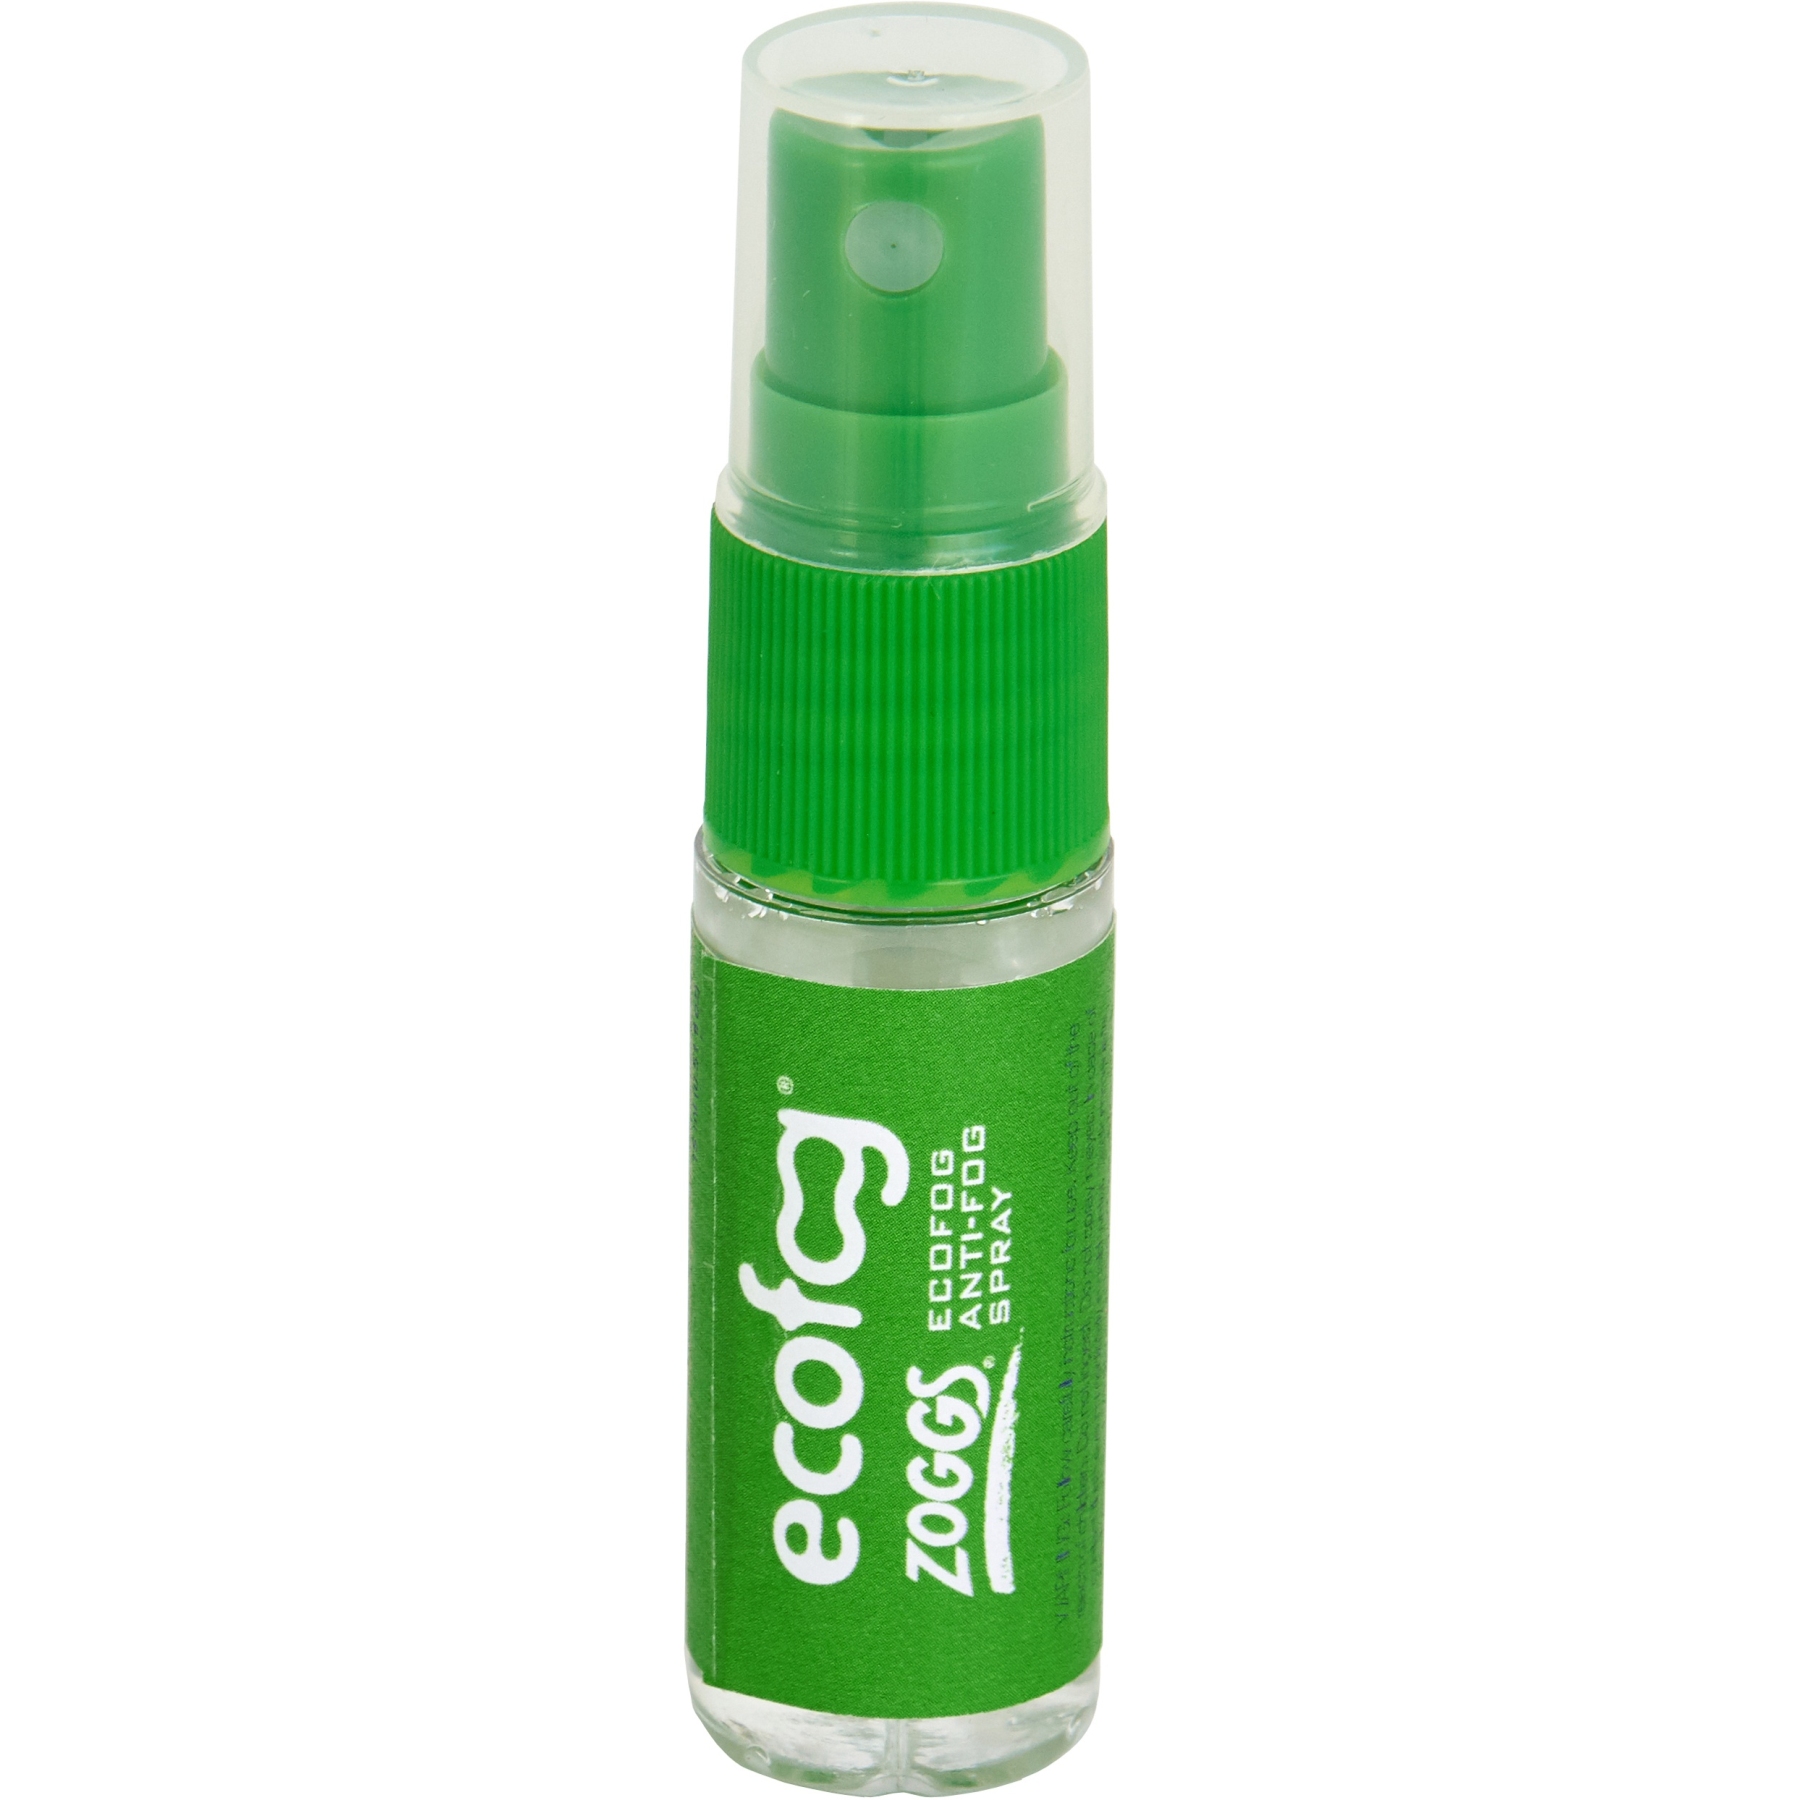 Productfoto van Zoggs ECOFOG Anti-fog spray